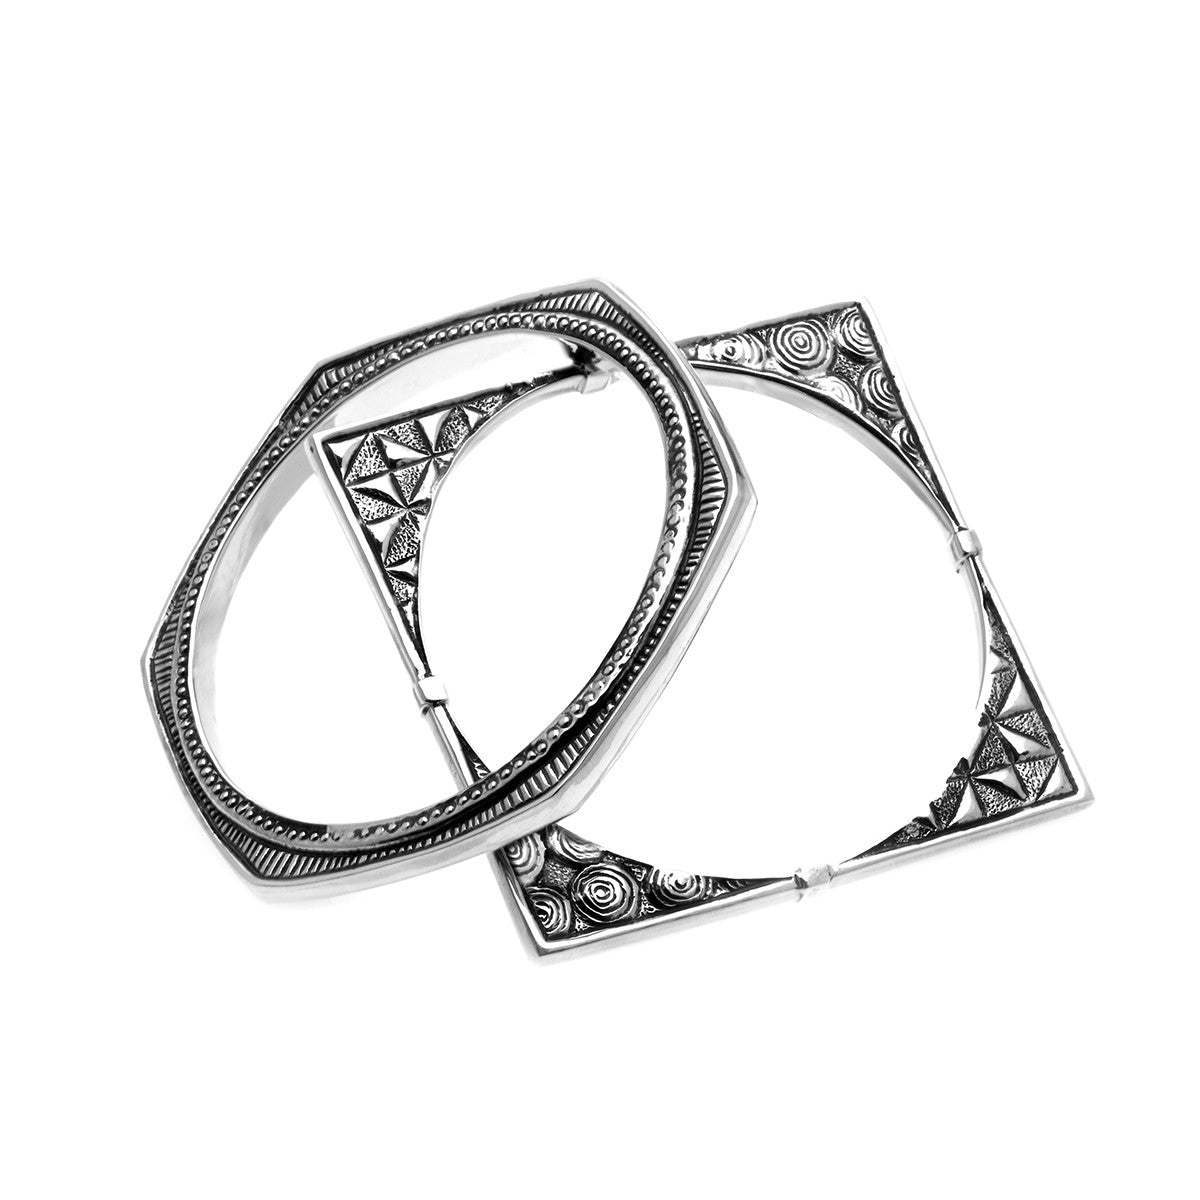 Wiener Werkstatte Hexagon Bangle - Cynthia Gale New York Jewelry